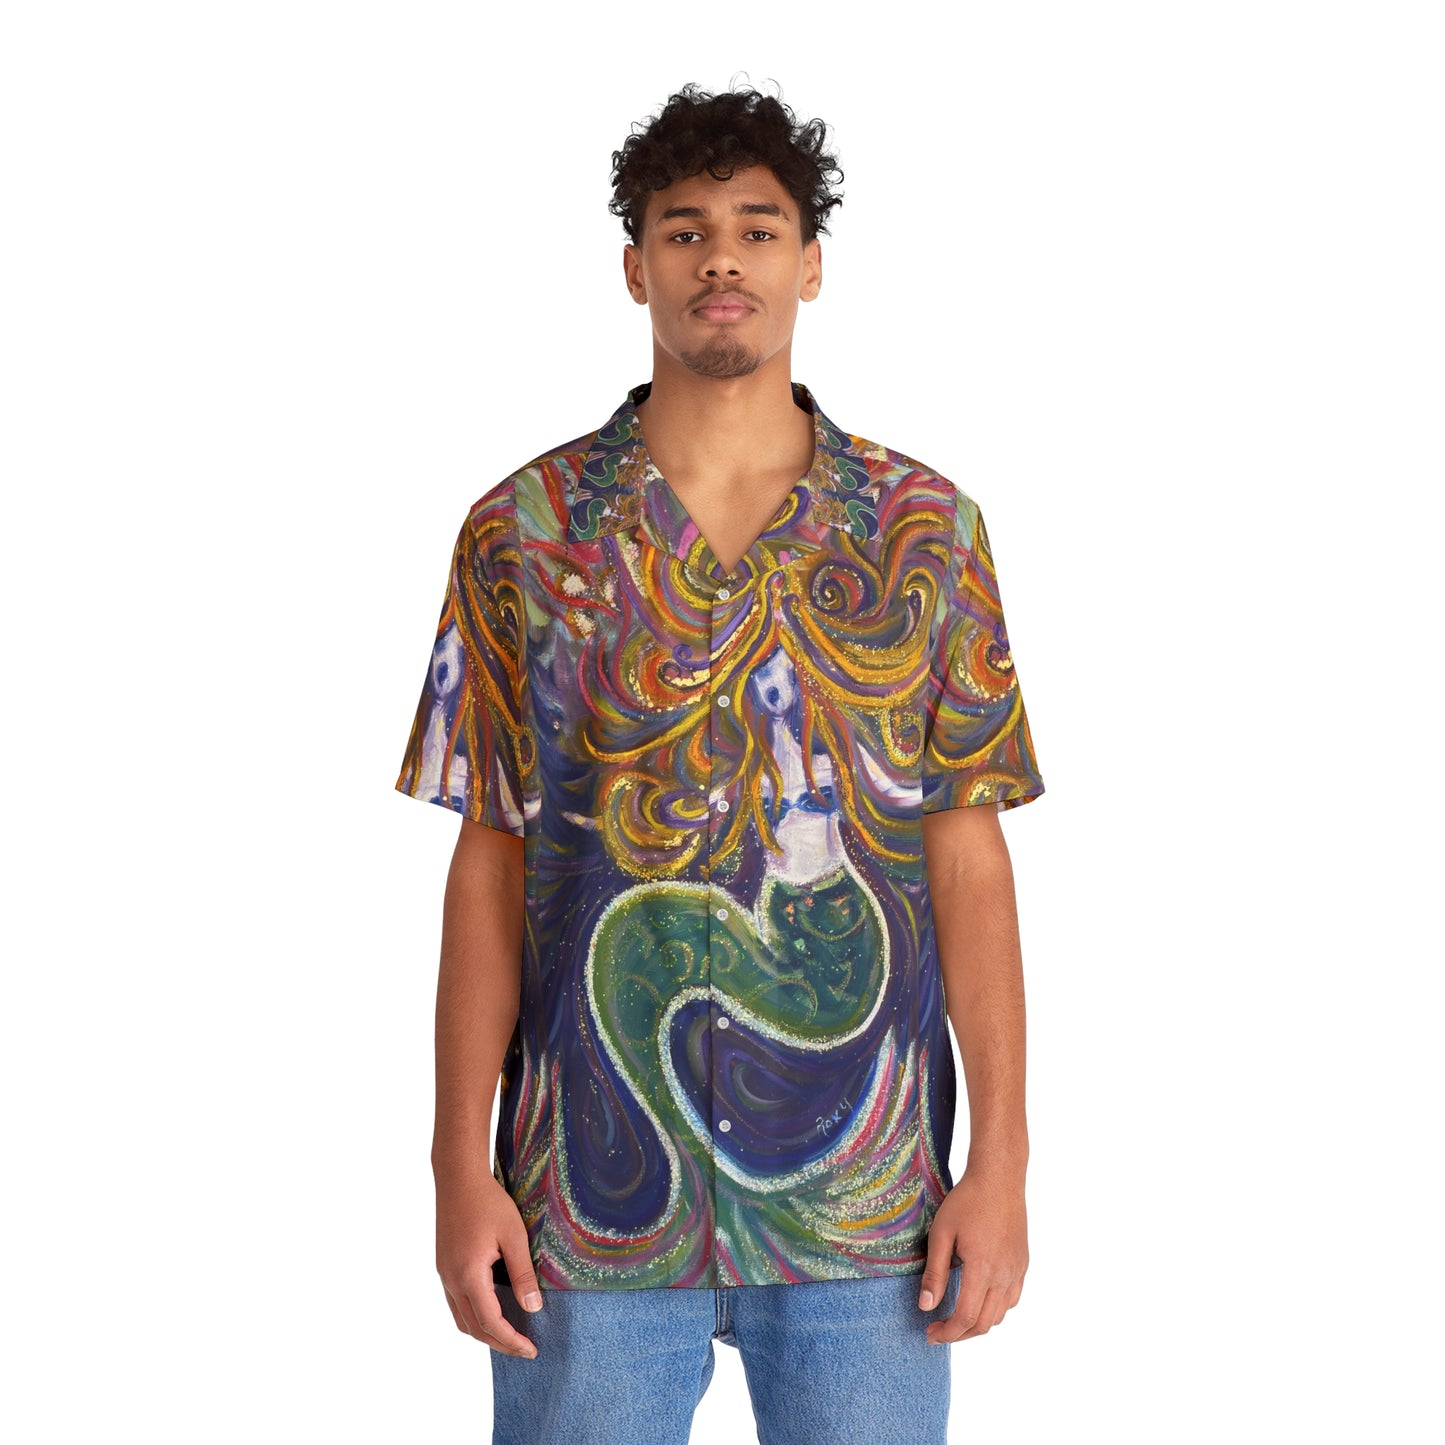 The Screaming Siren aka Mermaid Men's Hawaiian Shirt